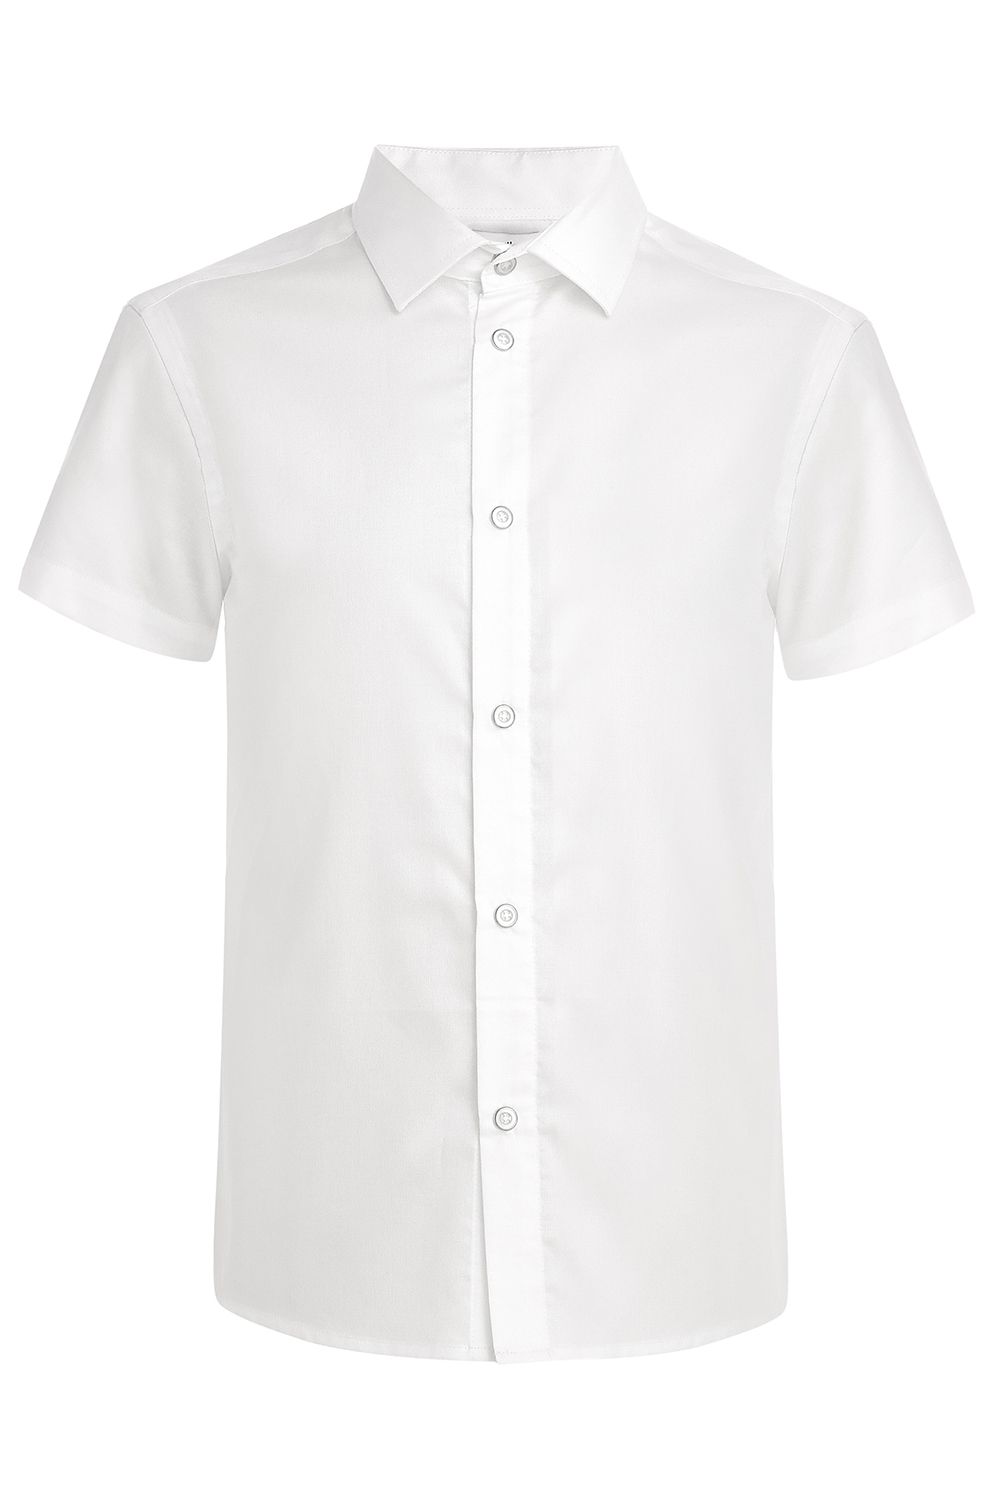 Рубашка Silver Spoon, размер 164, цвет белый SSFSB-929-13947-219 - фото 1